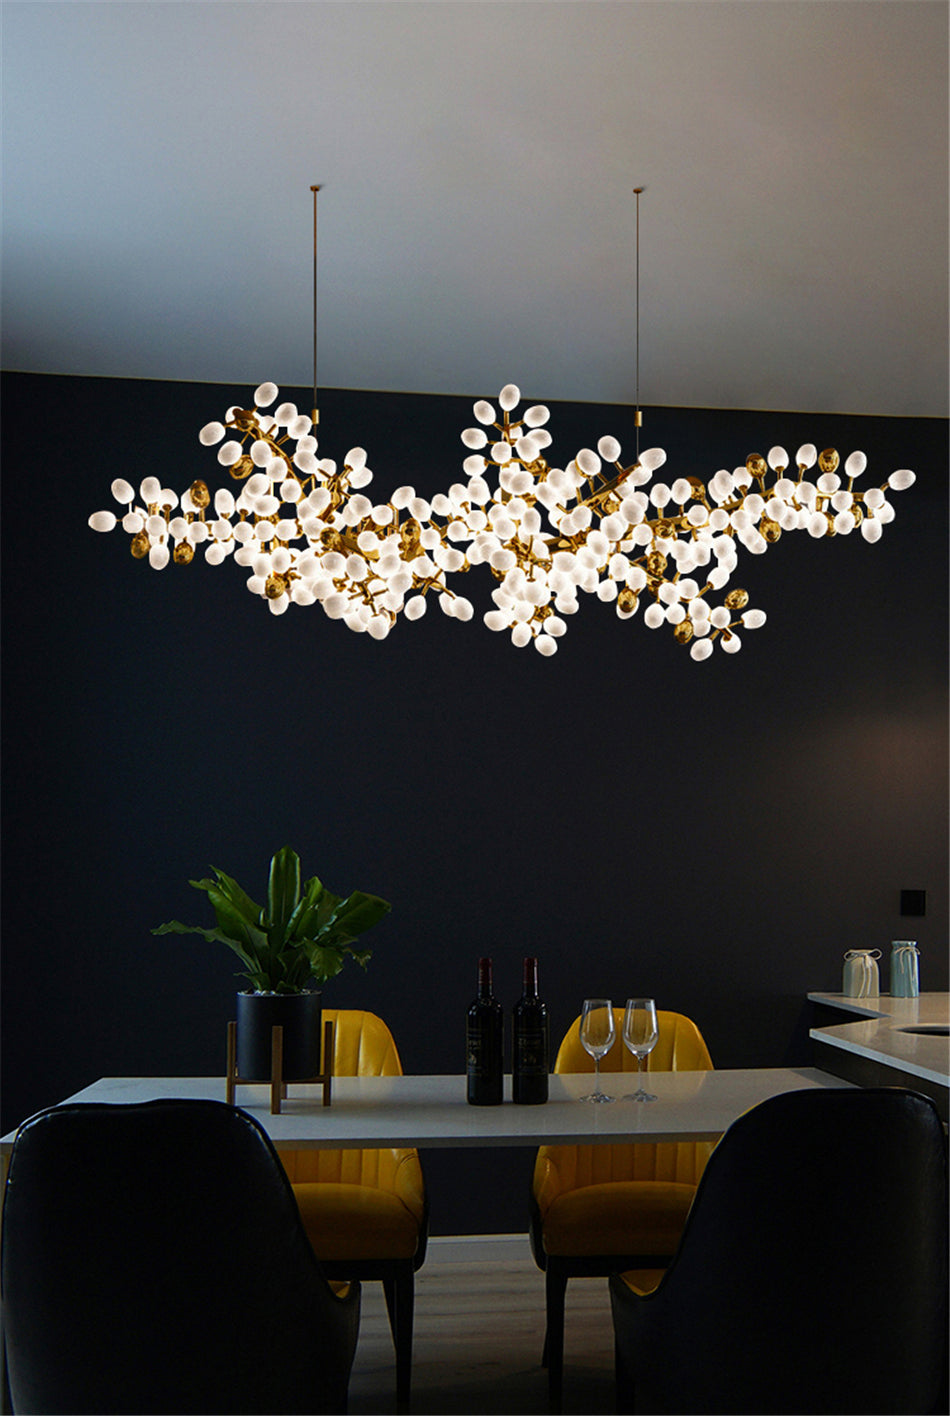 Chandelier Villa Living Room Crystal Lights Art Decoration Long Glass Ball Pendant Lights